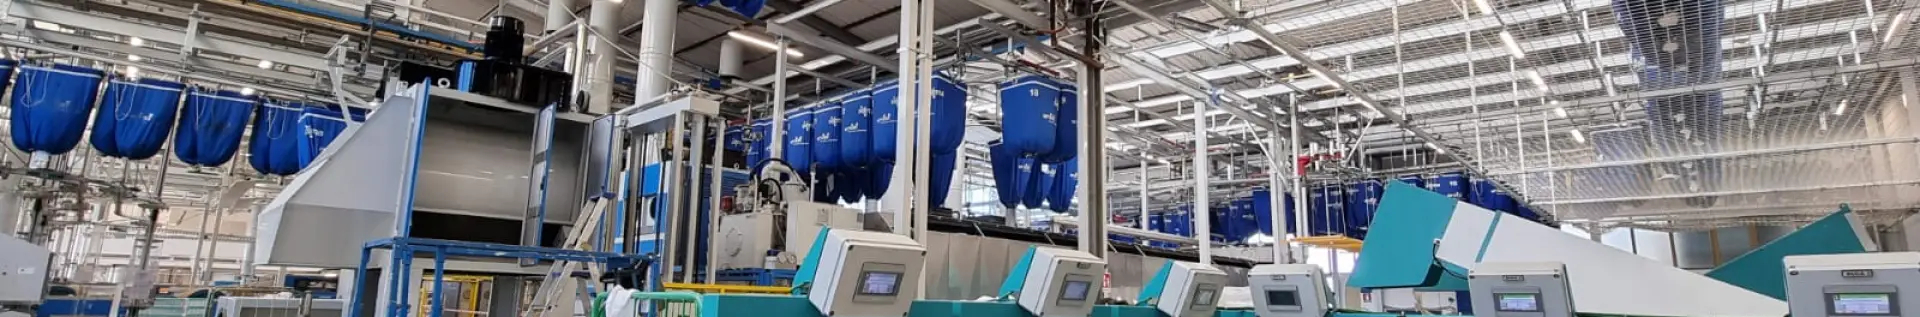 Rete anticaduta sacchi per lavanderie industriali - Cod. AN0408